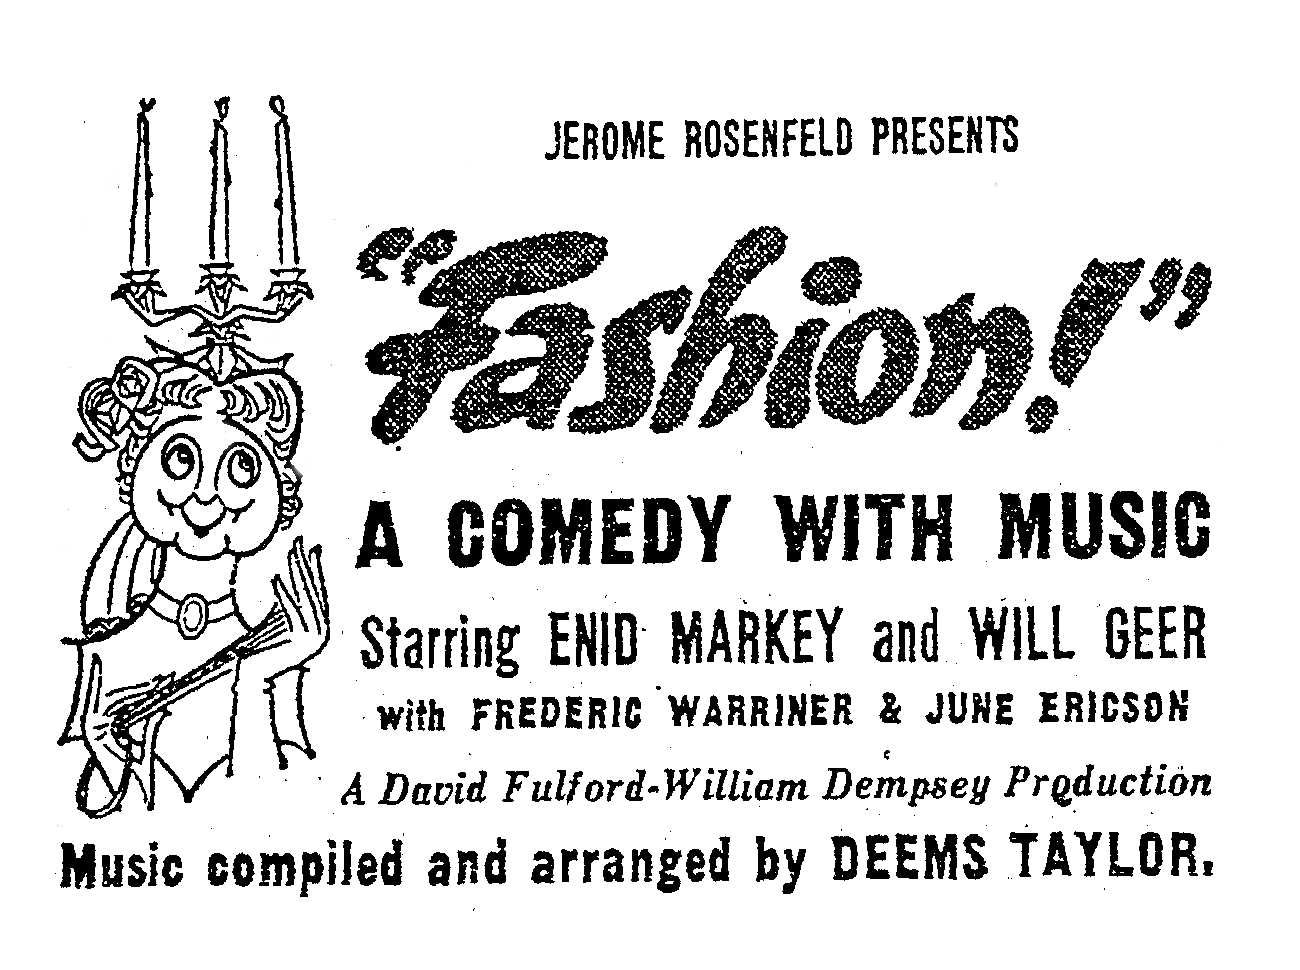 Fashion Musical 1959 Logo